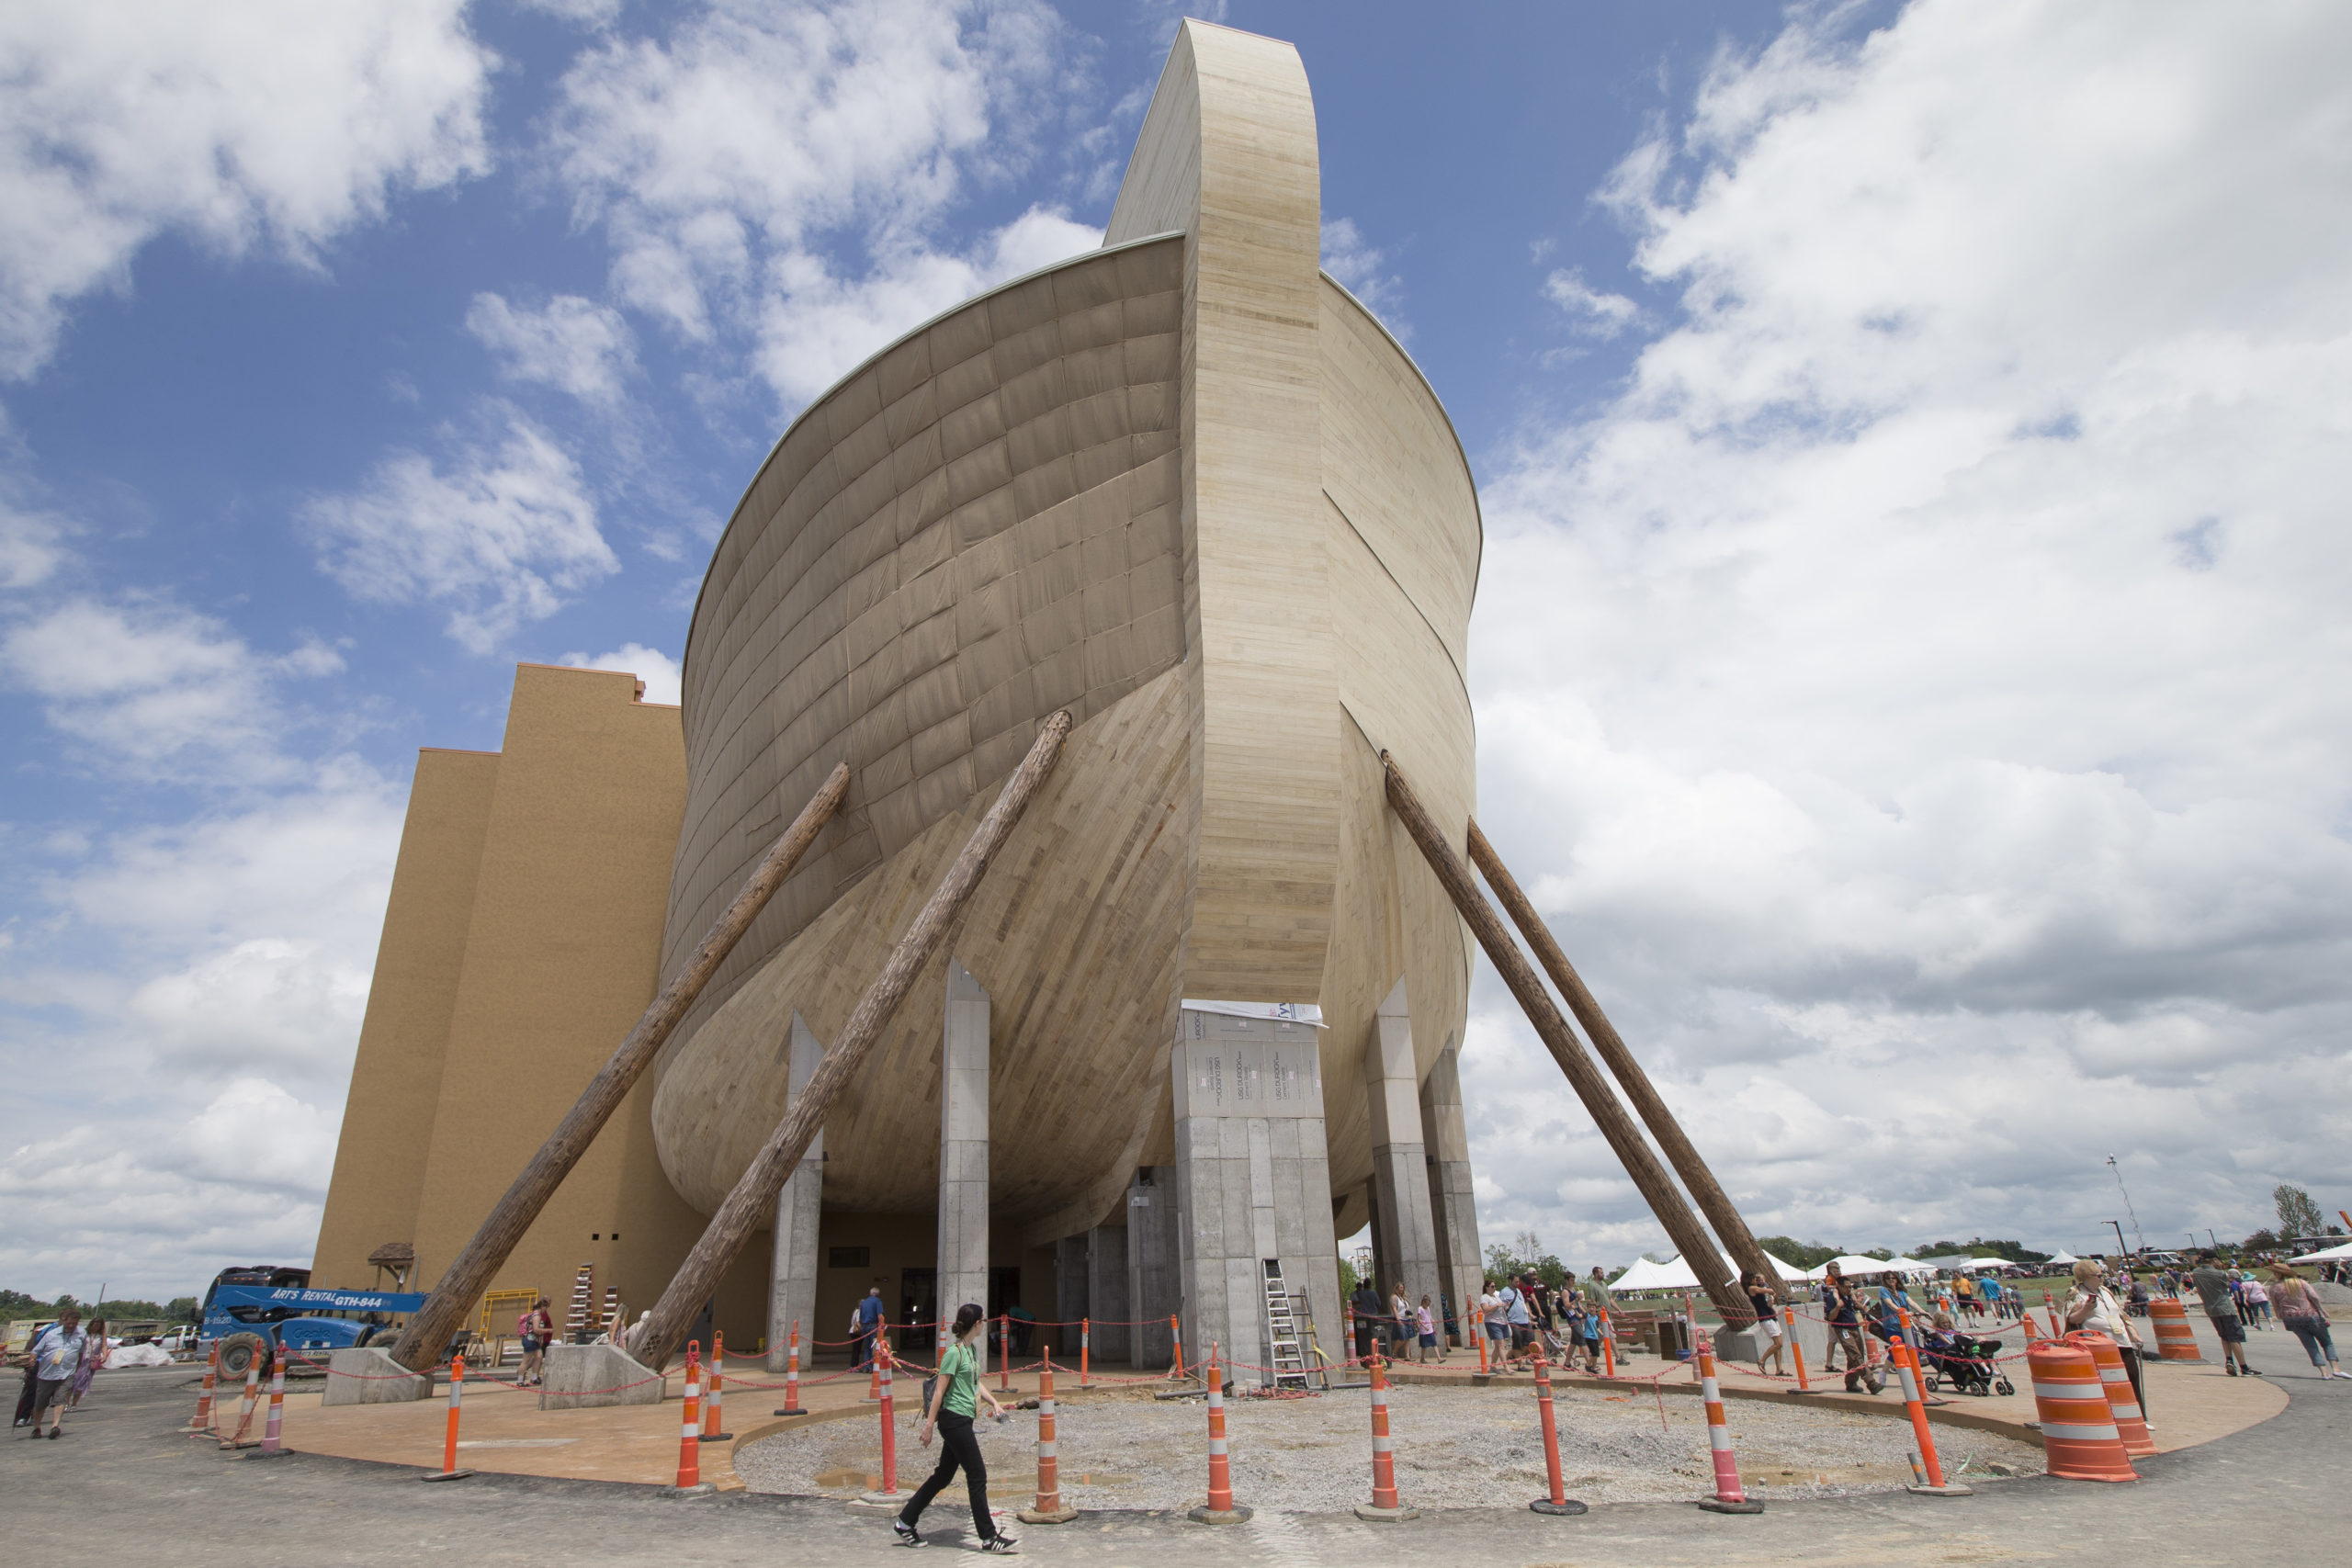 Barge-Size Noah’s Ark Is A Creationist’s Theme Park